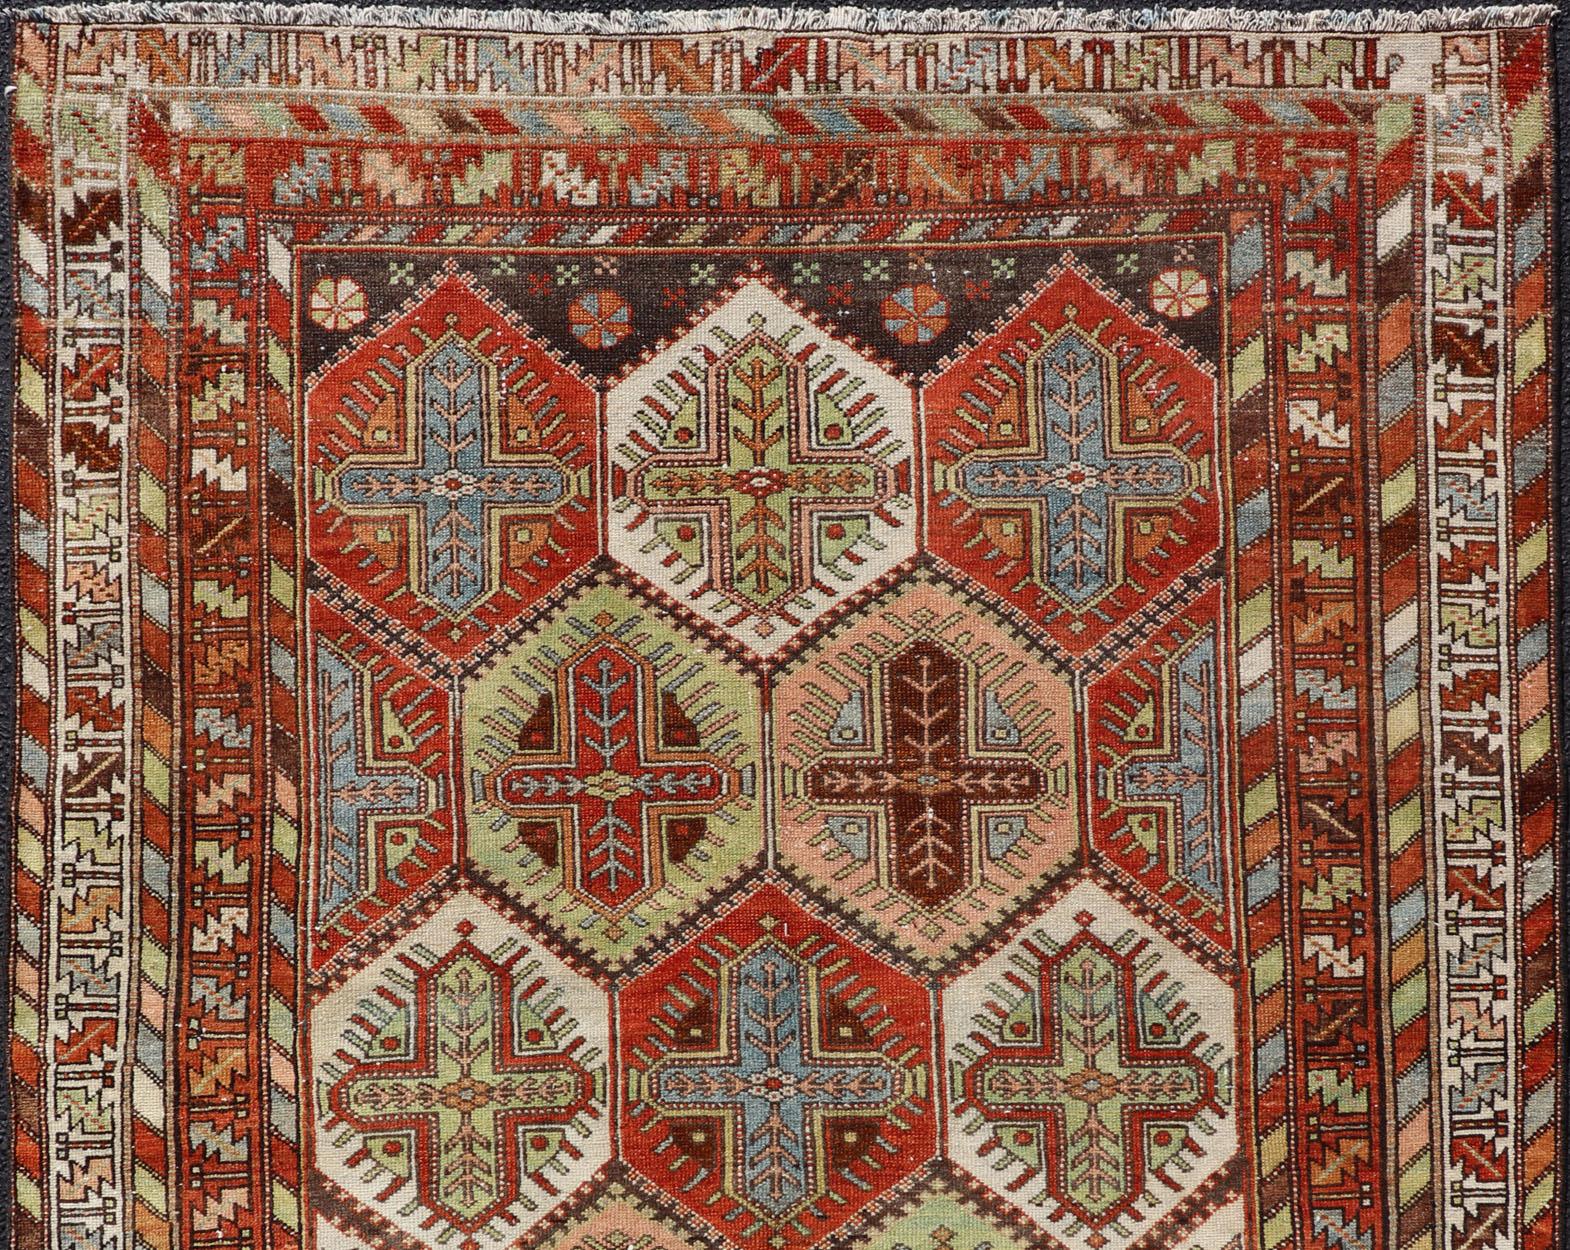 Antique Persian Tribal Motif Design with Crosses Bakhtiari Rug in Multi Colors For Sale 3